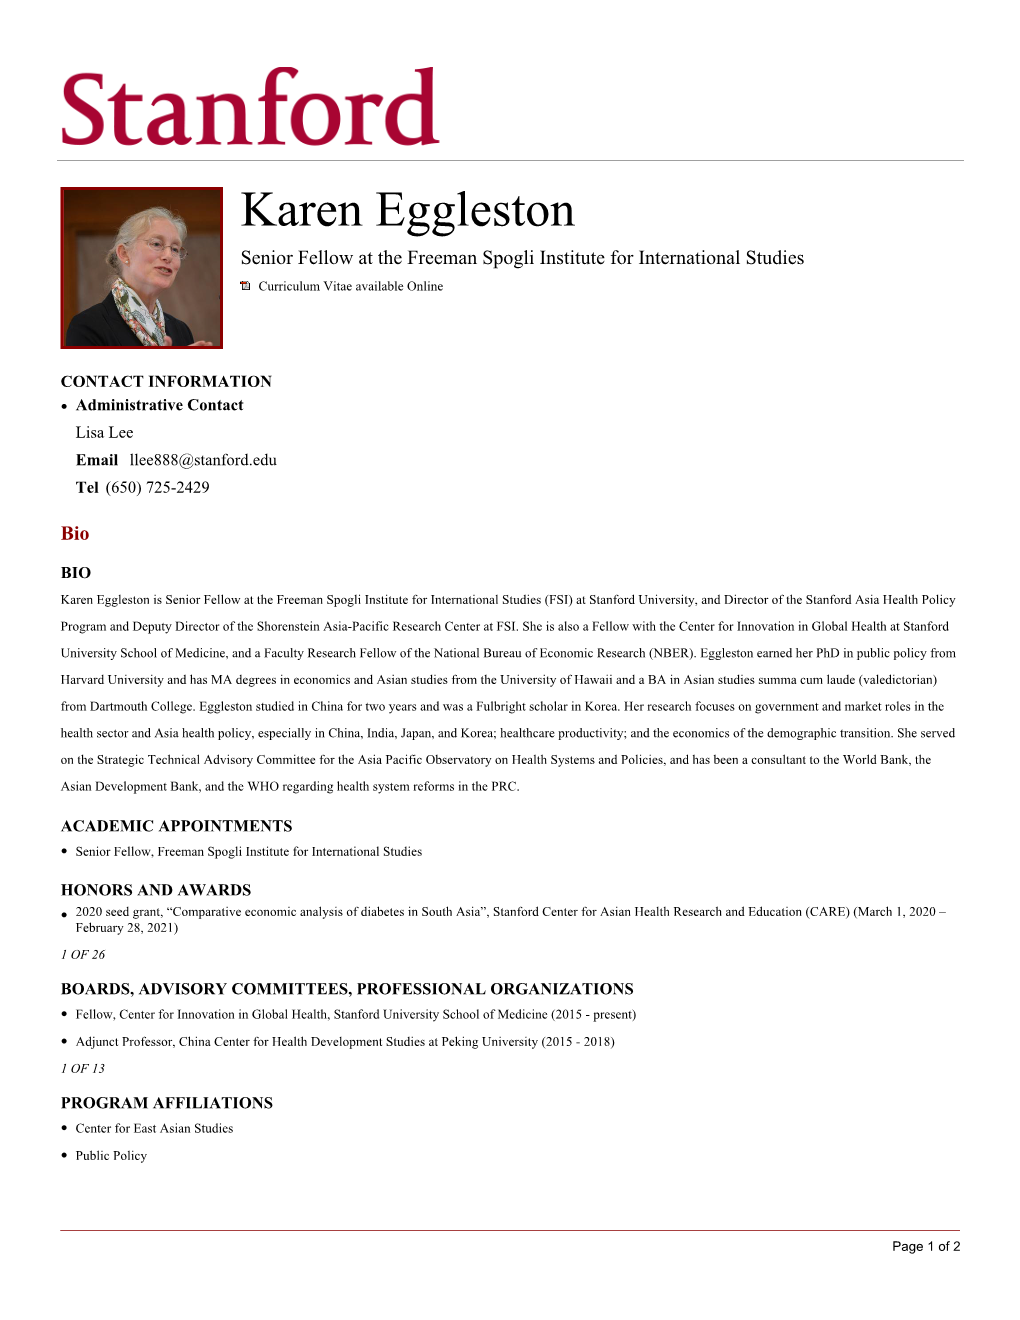 Karen Eggleston Senior Fellow at the Freeman Spogli Institute for International Studies Curriculum Vitae Available Online